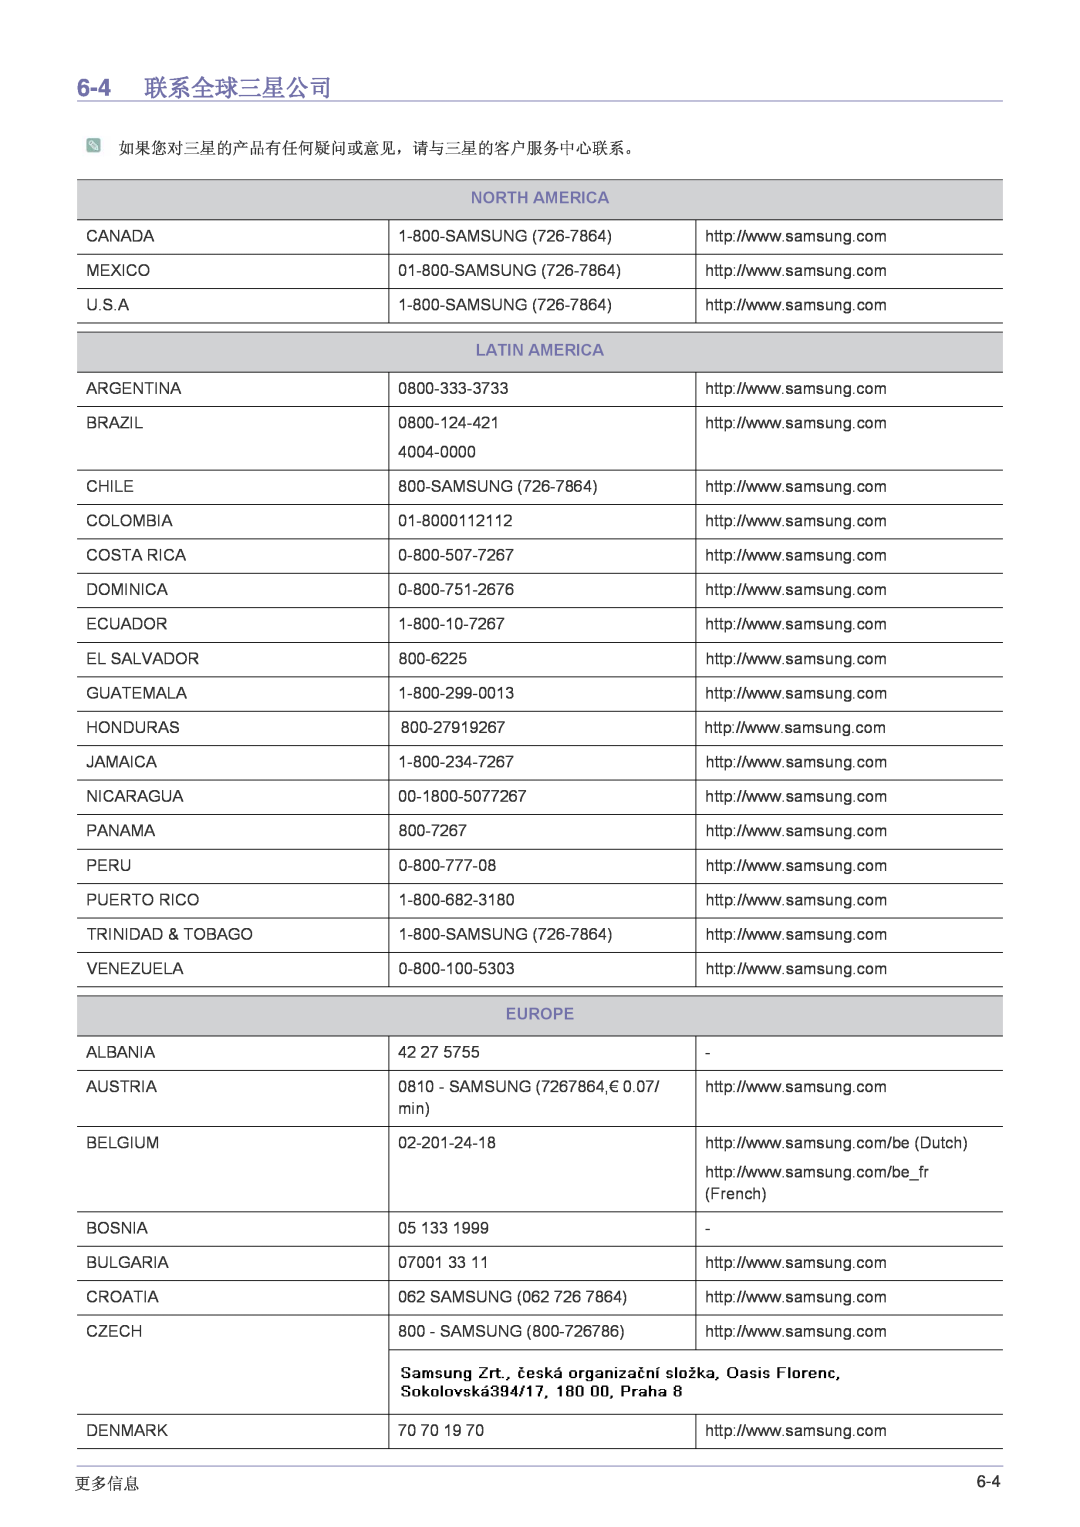 Samsung SP1005XWX/EN, SP1055XWX/EN manual 6-4 联系全球三星公司, North America, Latin America, Europe 